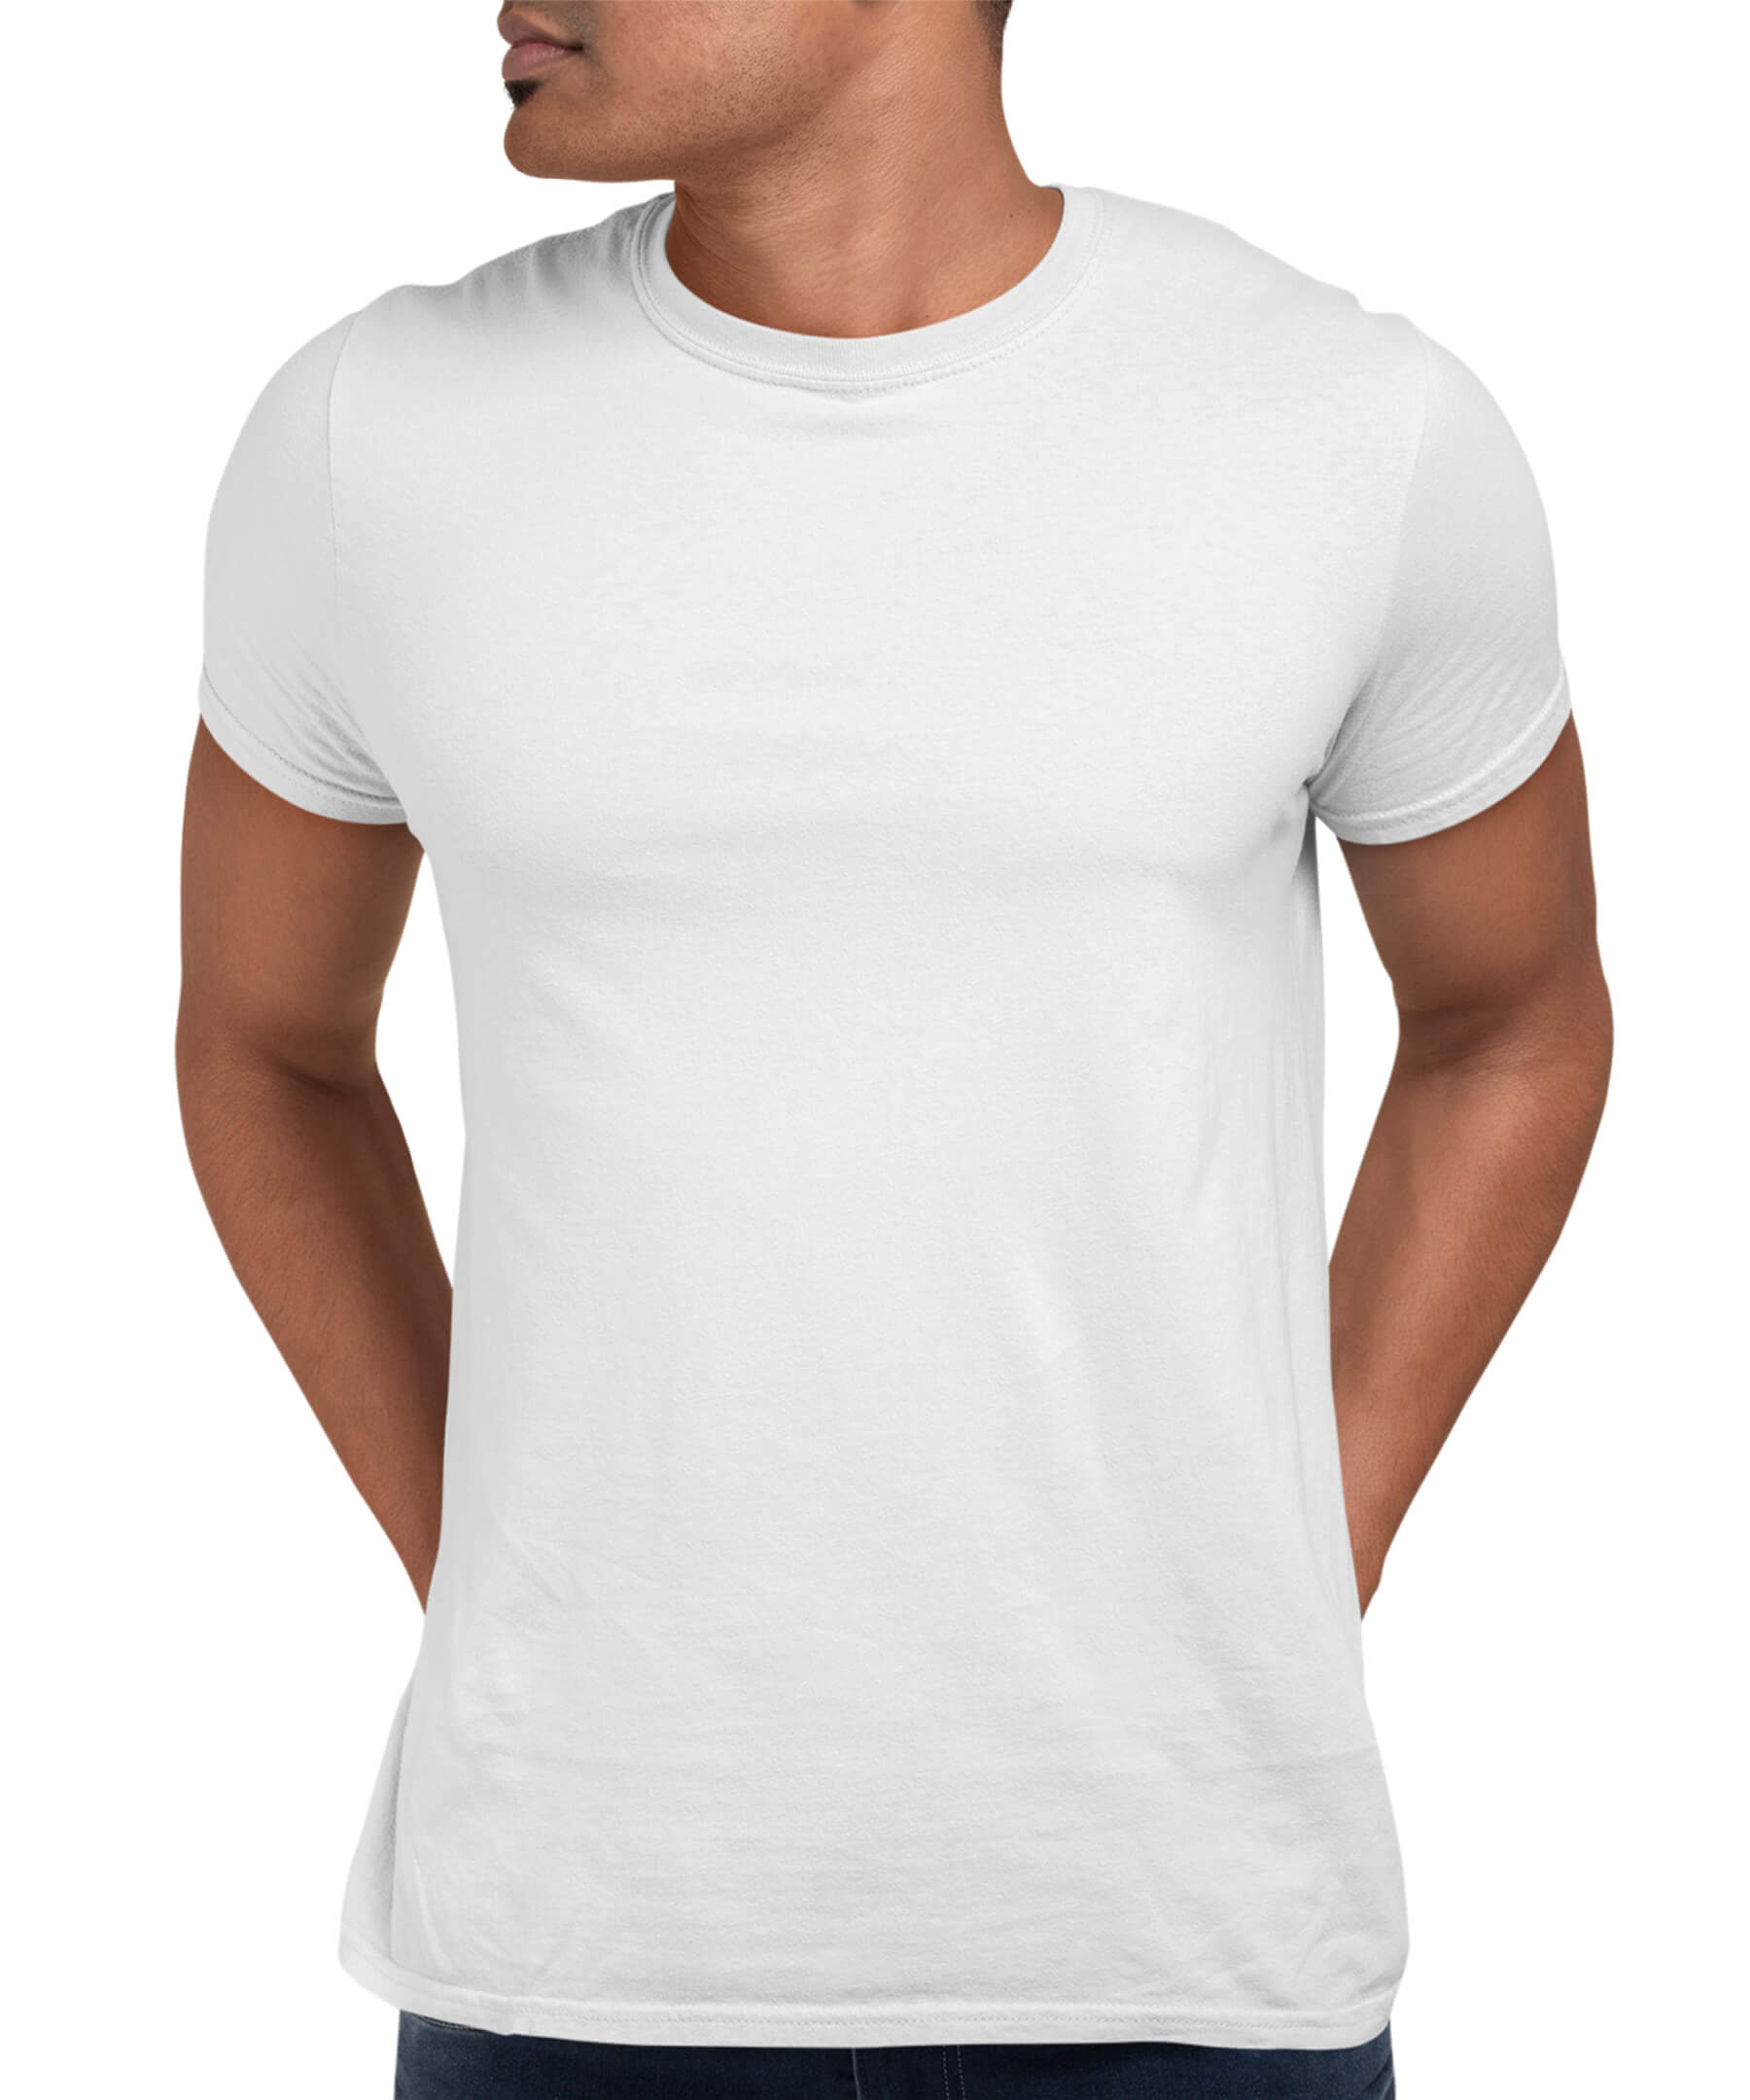 MEDLE Solid White Men's T-shirt | Regular Fit Elegant Cotton Tee ...